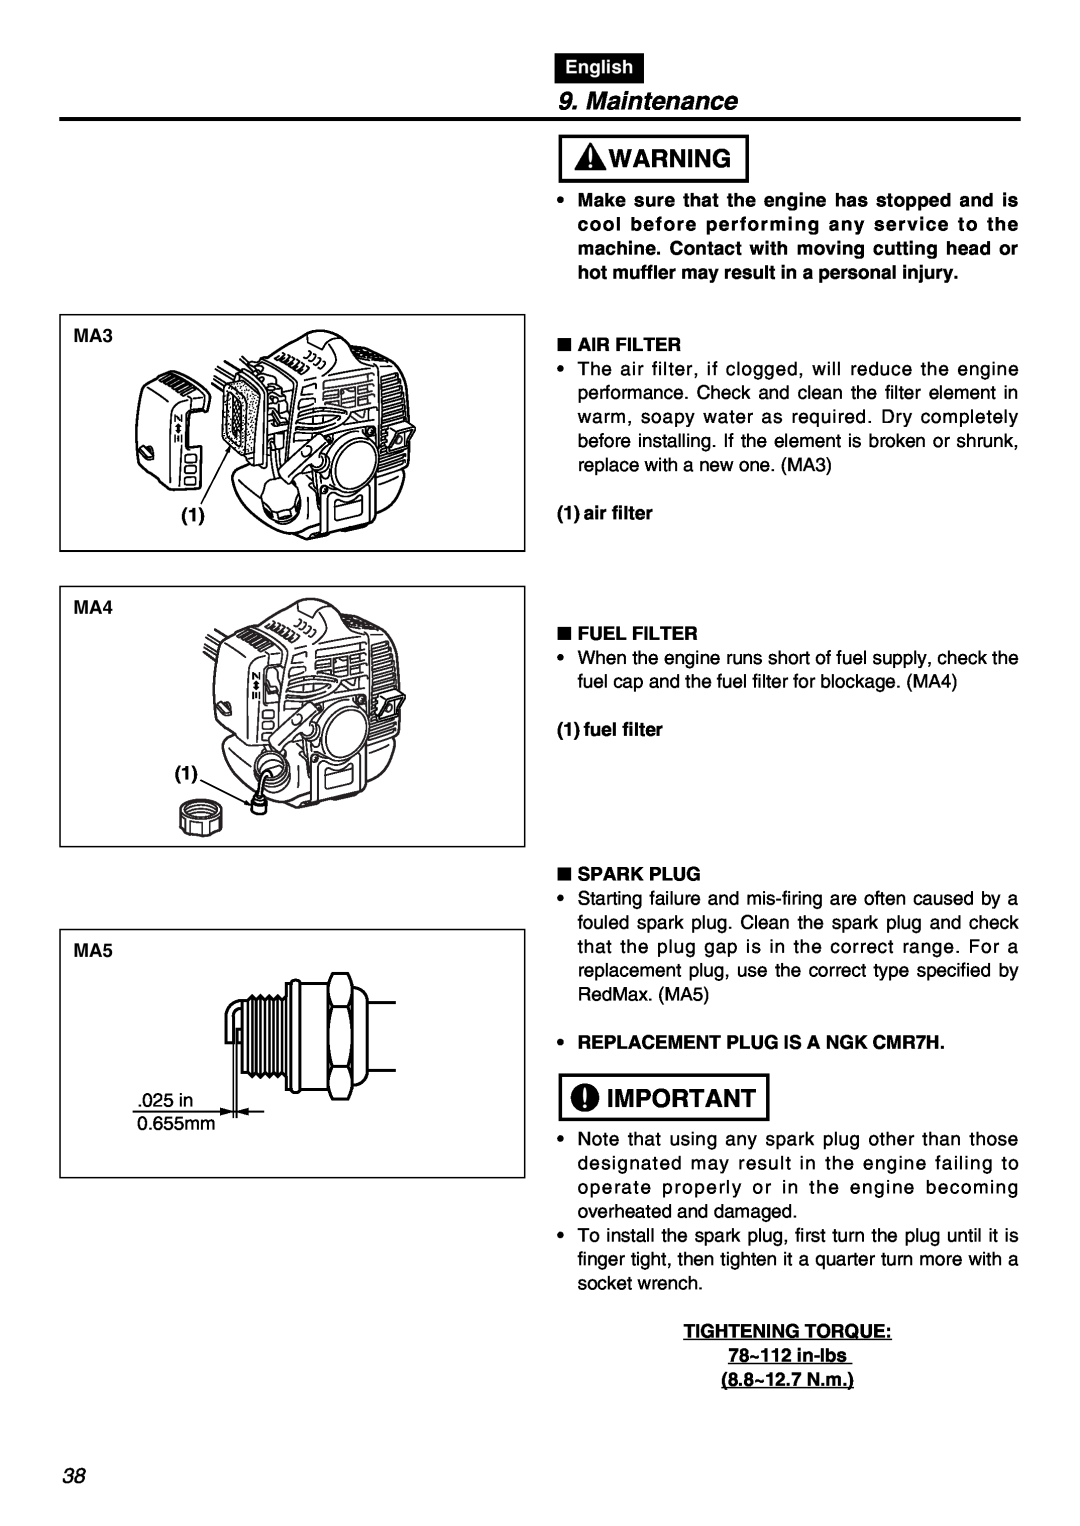 Univex SRTZ2401 manual Maintenance, MA3 1 MA4 1 MA5, English, Air Filter, air filter FUEL FILTER, fuel filter SPARK PLUG 